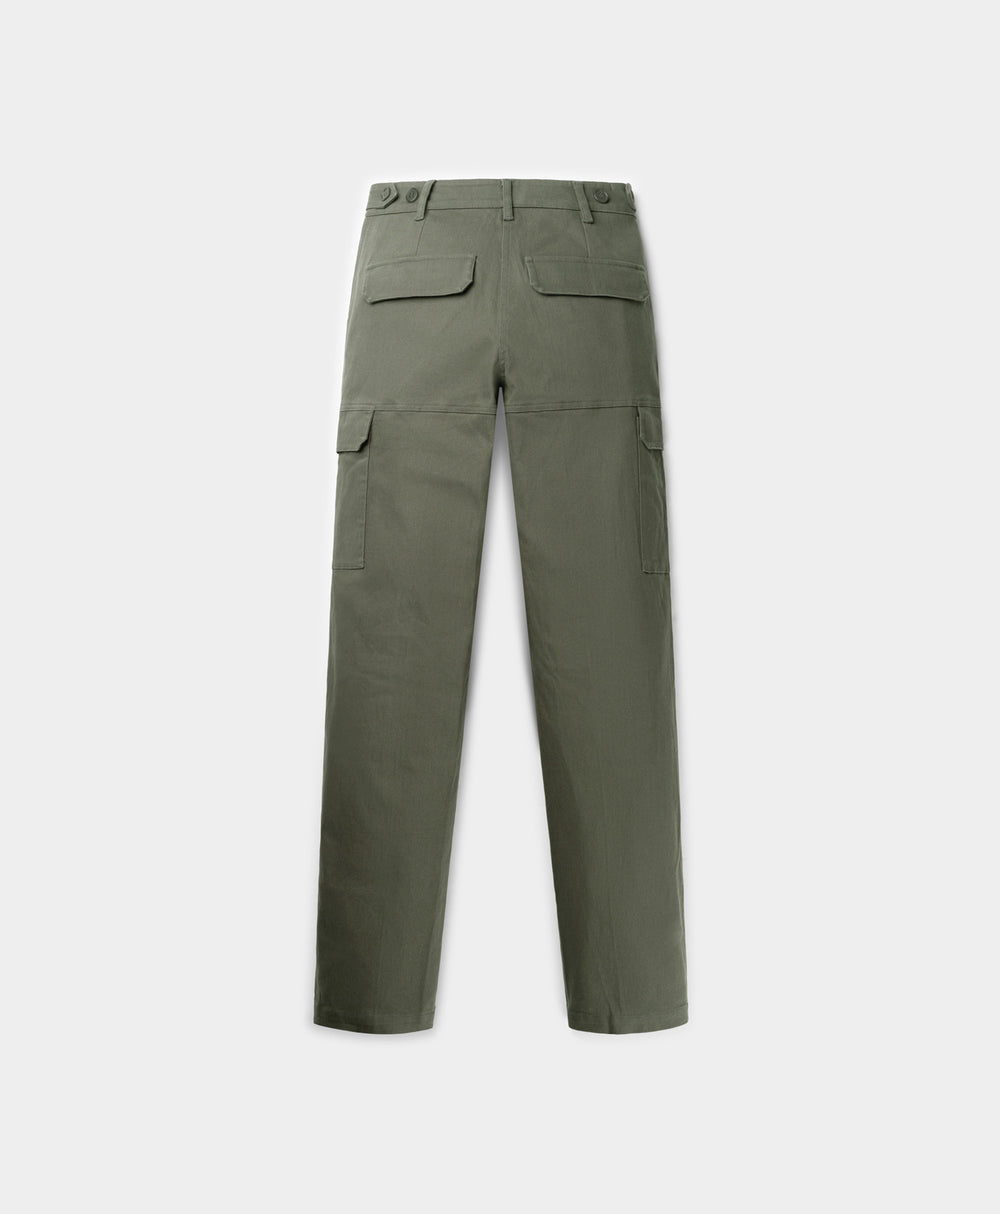 DP - Chimera Green Ezea  Cargo Pants - Packshot - Rear